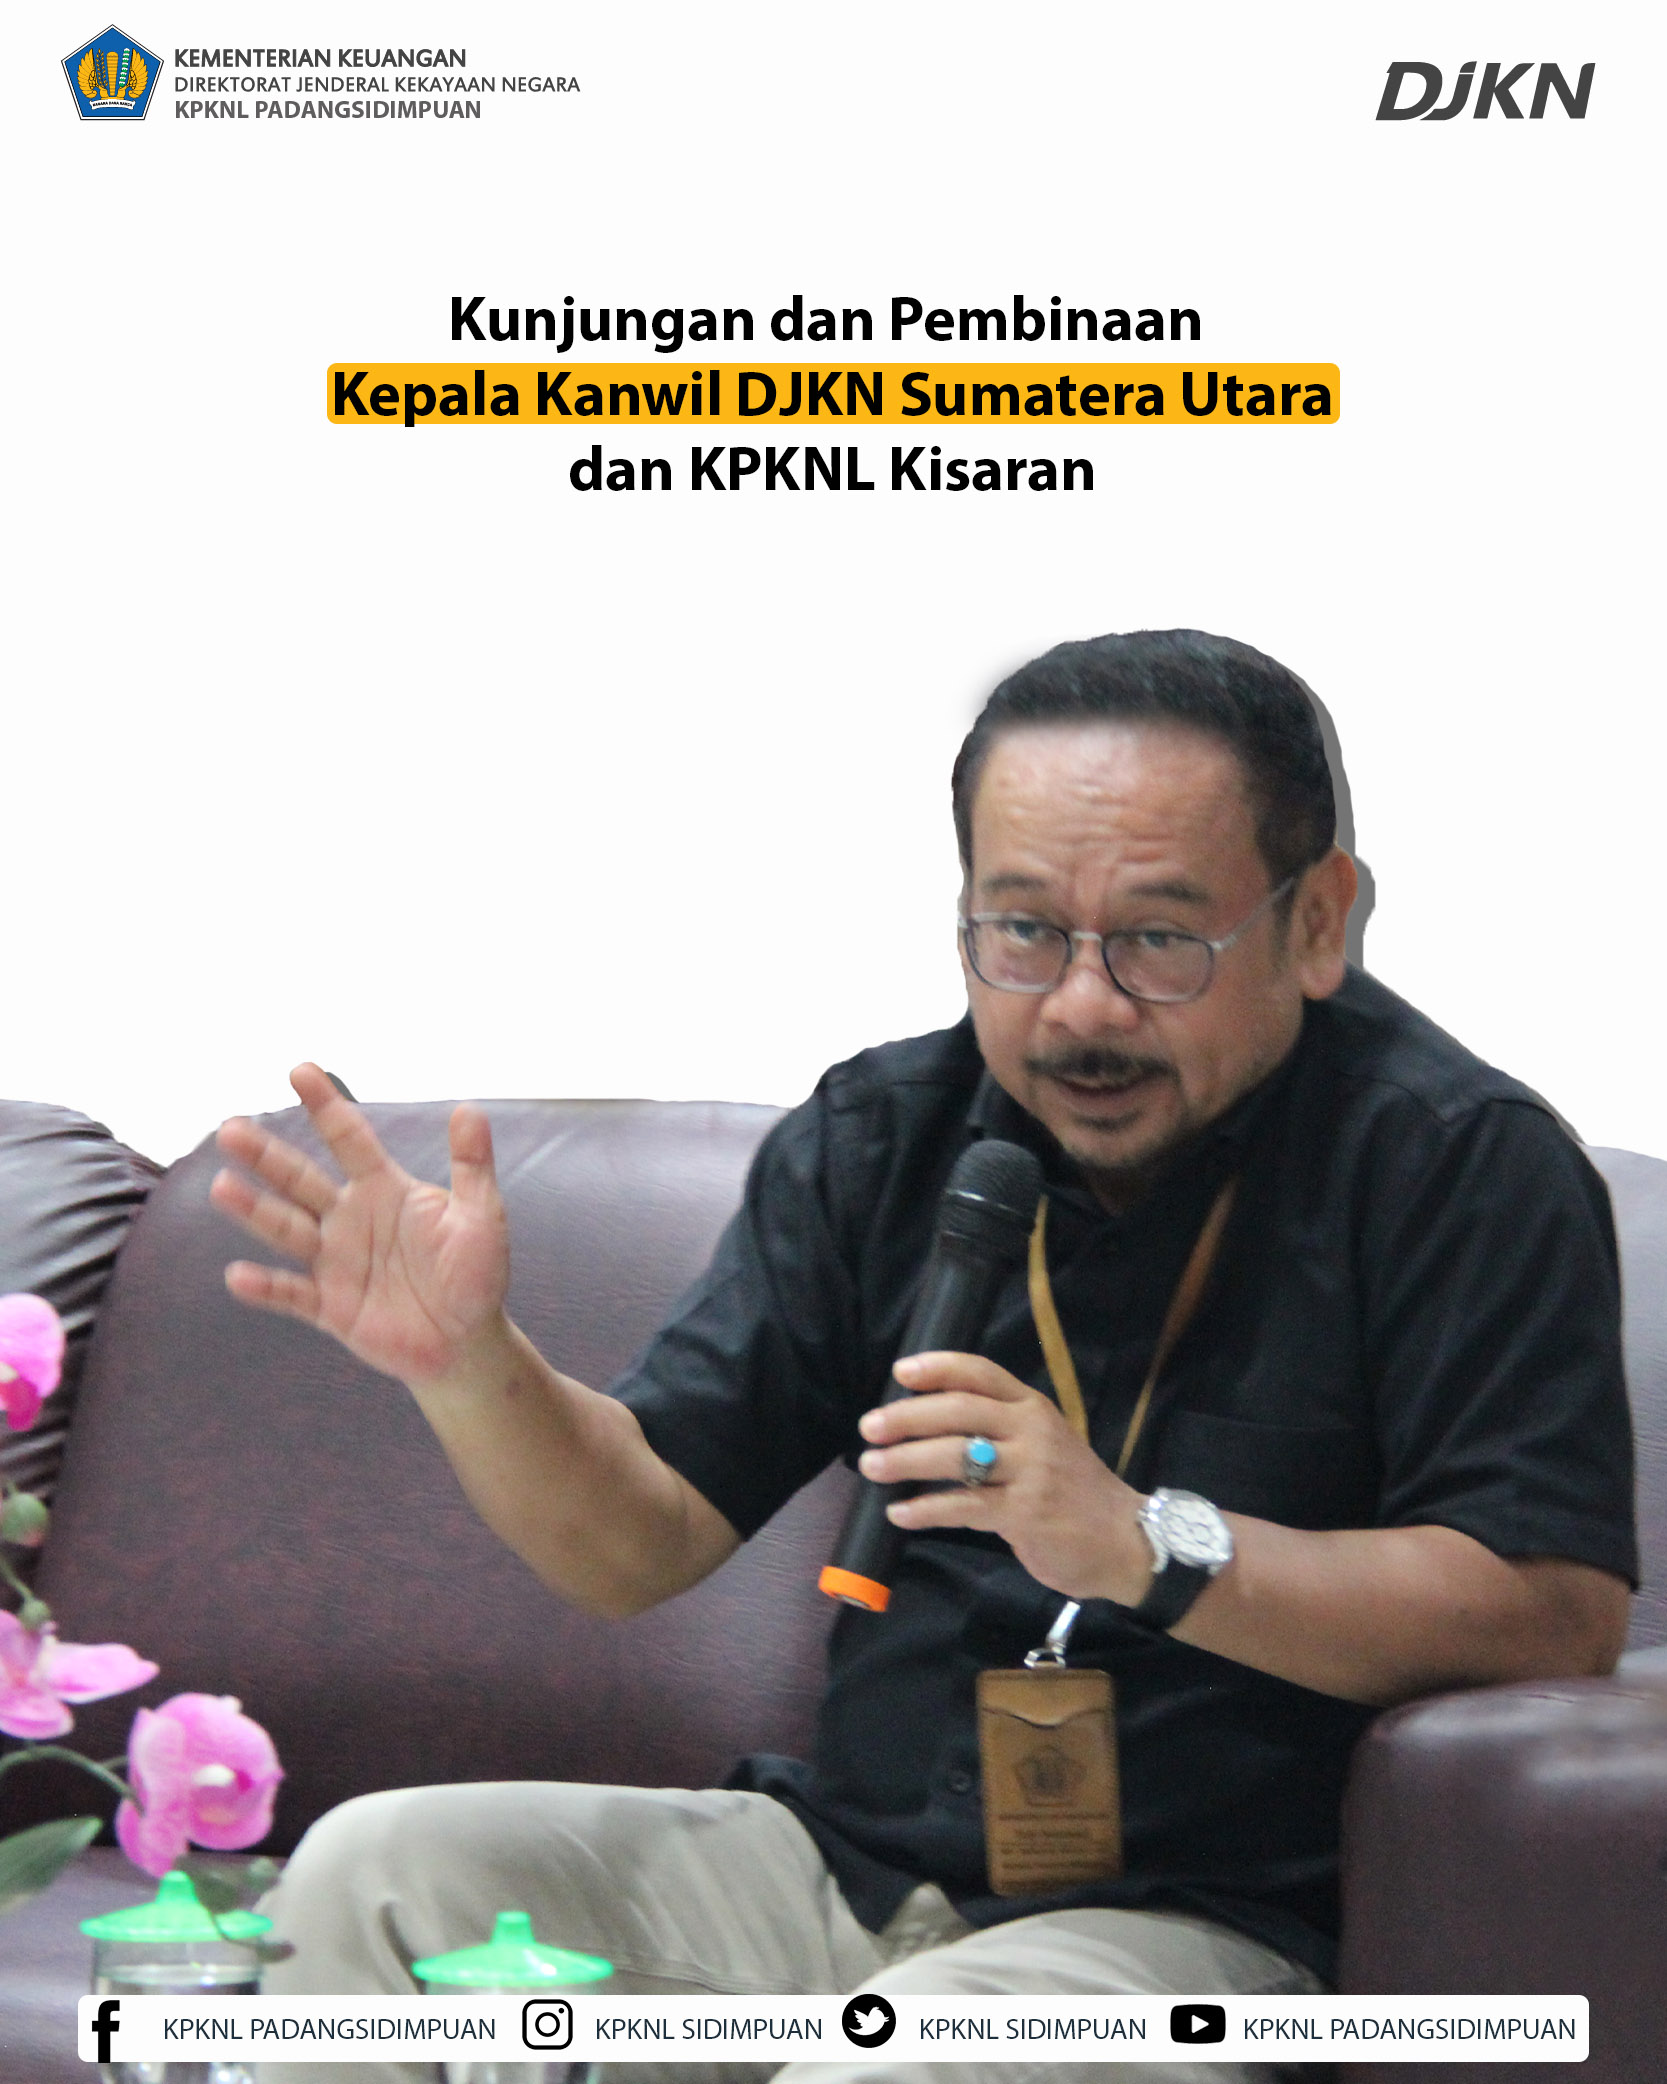 Kunjungan Kerja dan Pembinaan  Kepala Kanwil DJKN Sumatera Utara serta Asistensi Pembangunan ZI-WBK KPKNL Kisaran